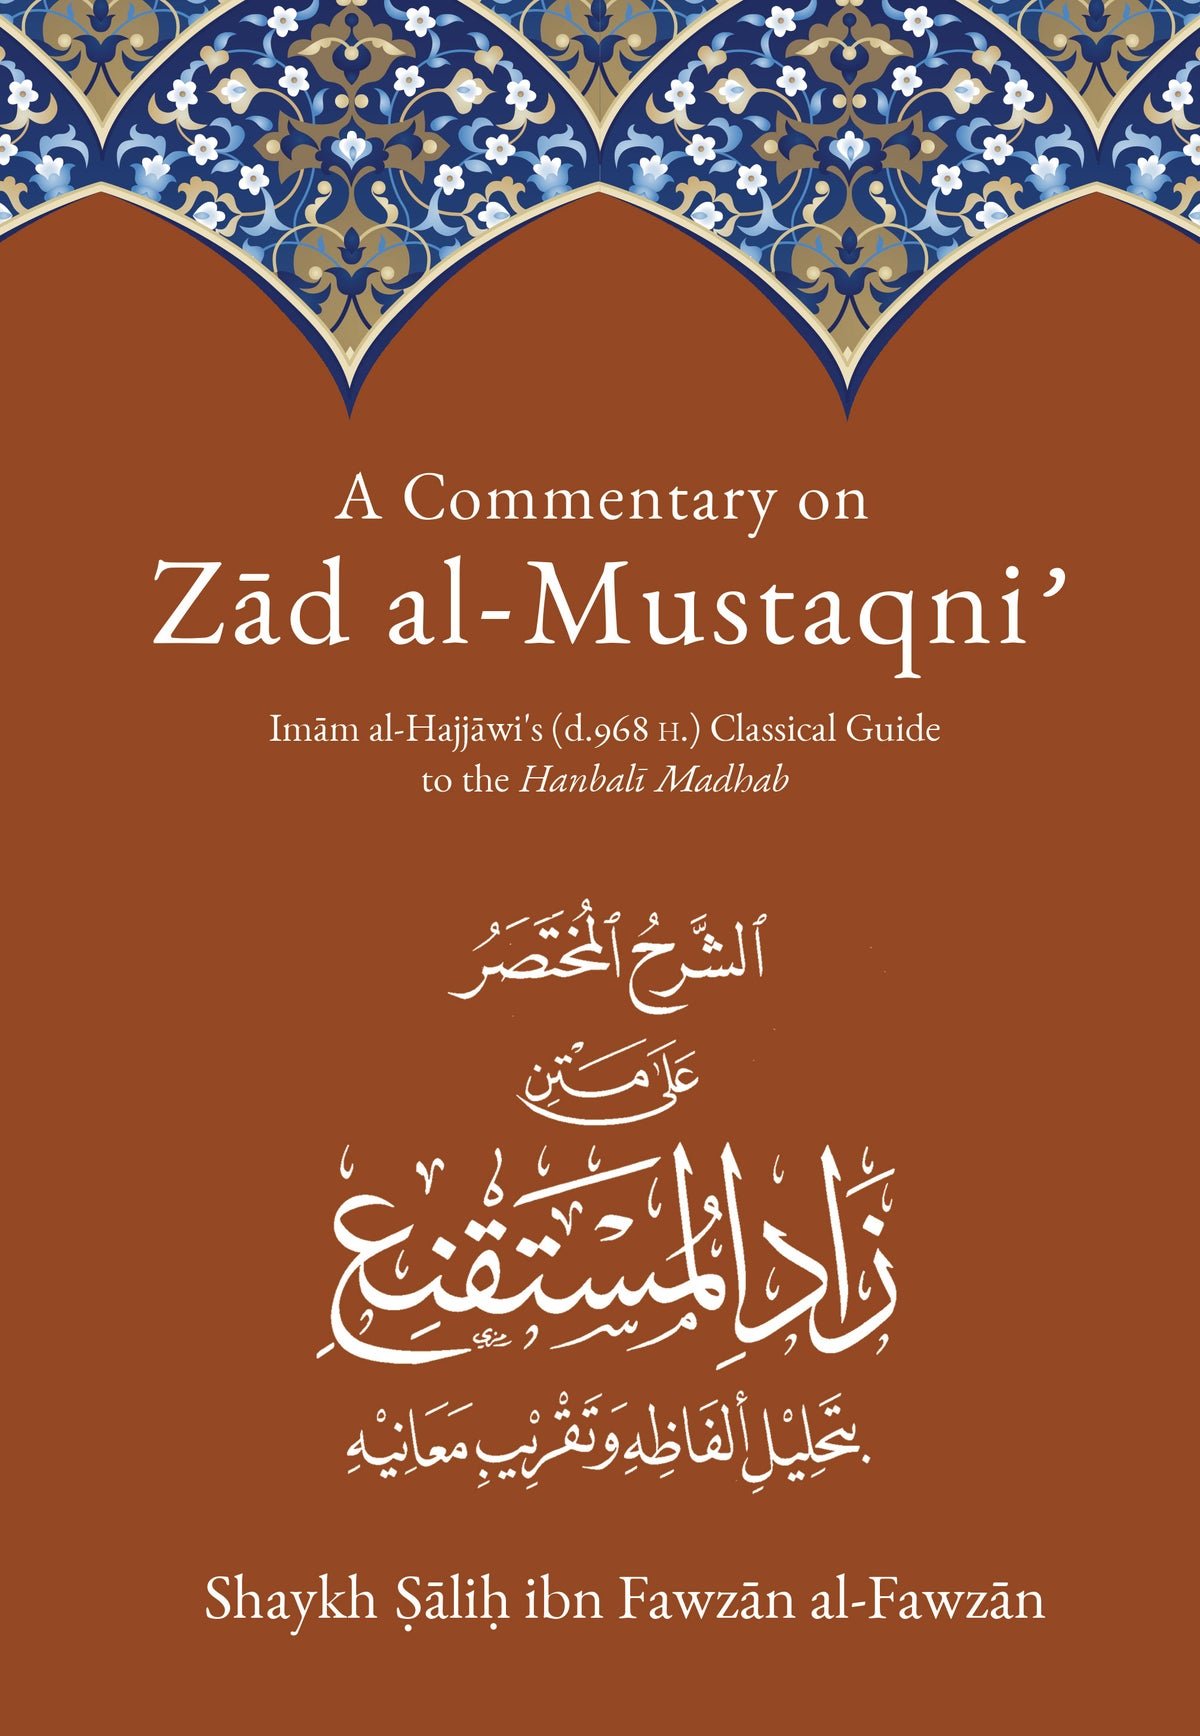 Image of Zad al-Mustaqni Revisions